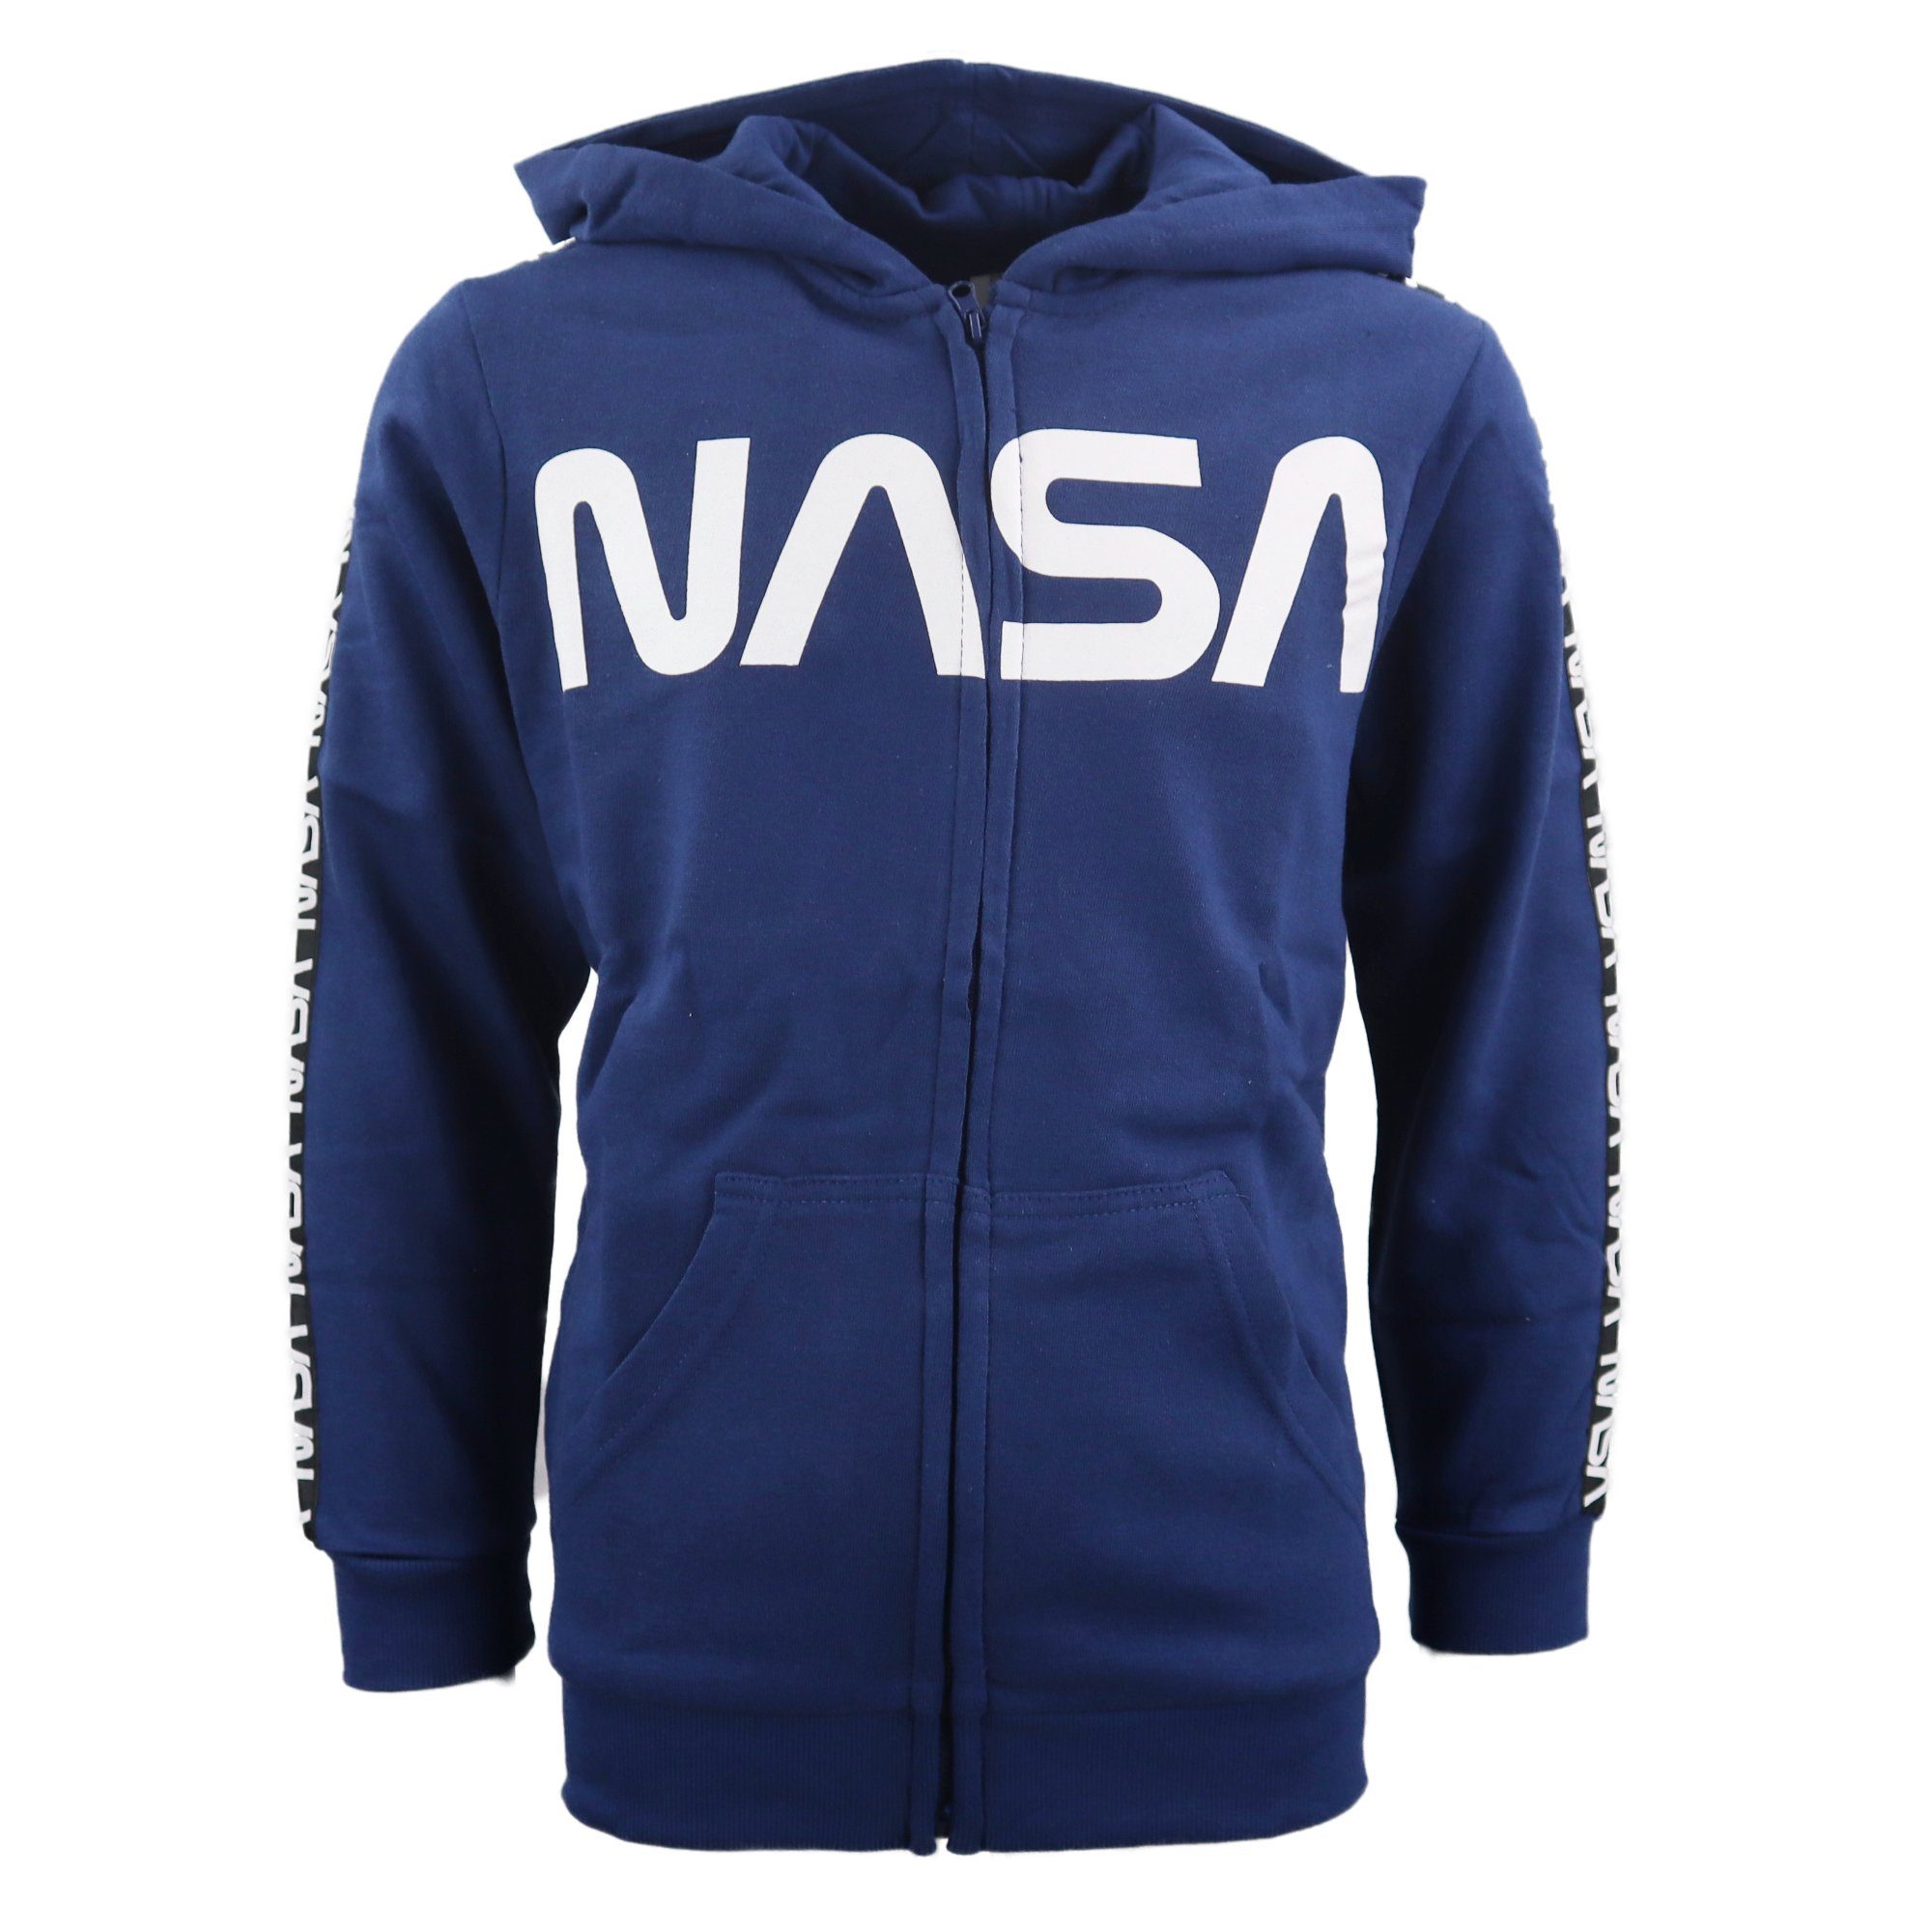 NASA Hoodie NASA Jungen Baumwolle, Kapuzen 134 Jugend Kinder Pulli 164, Blau 100% Gr. bis